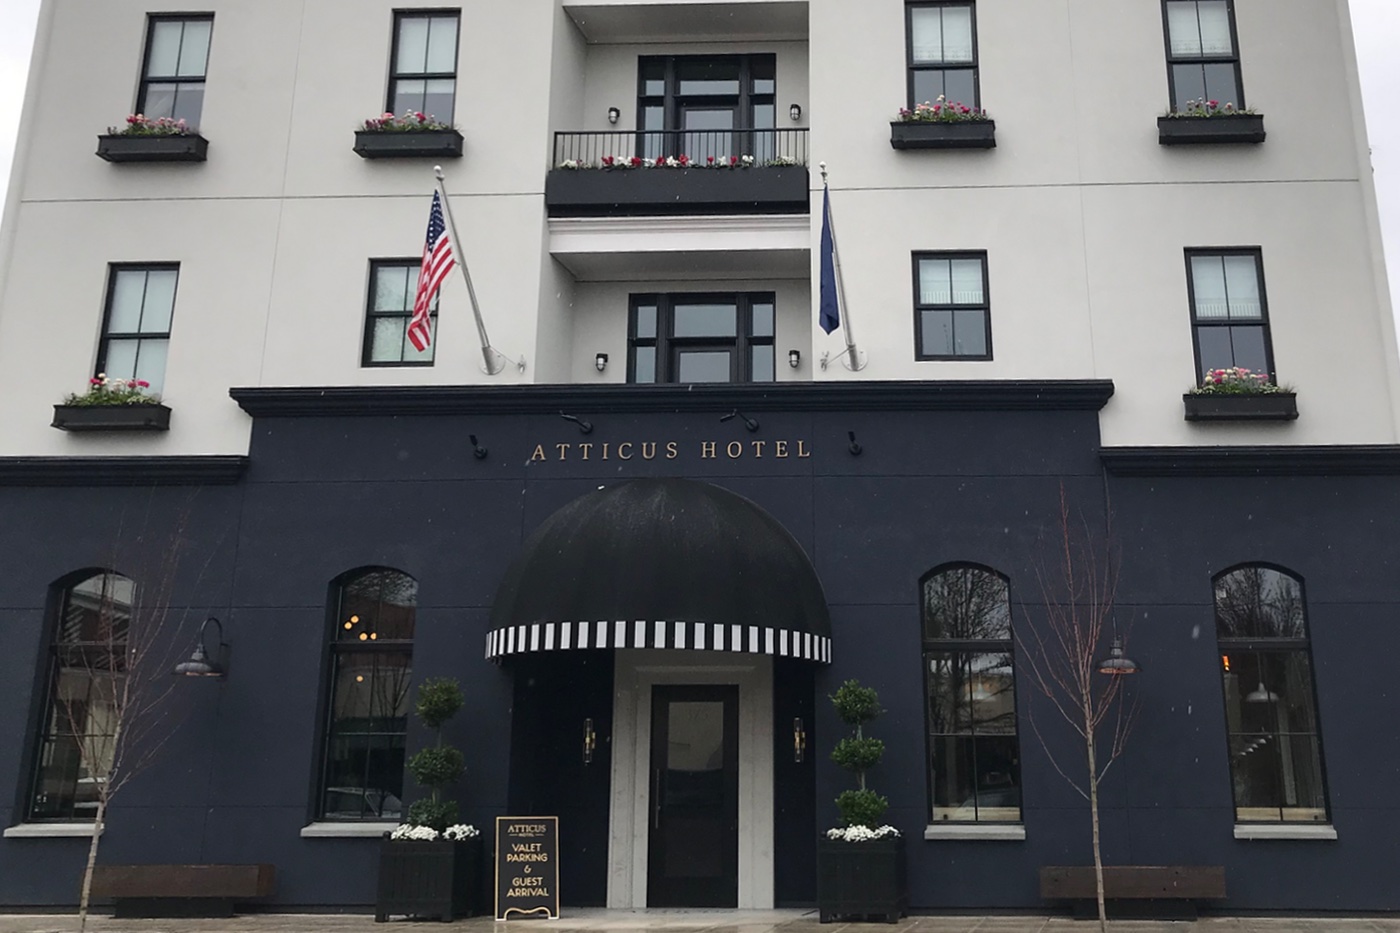 Atticus Hotel Exterior Entrance